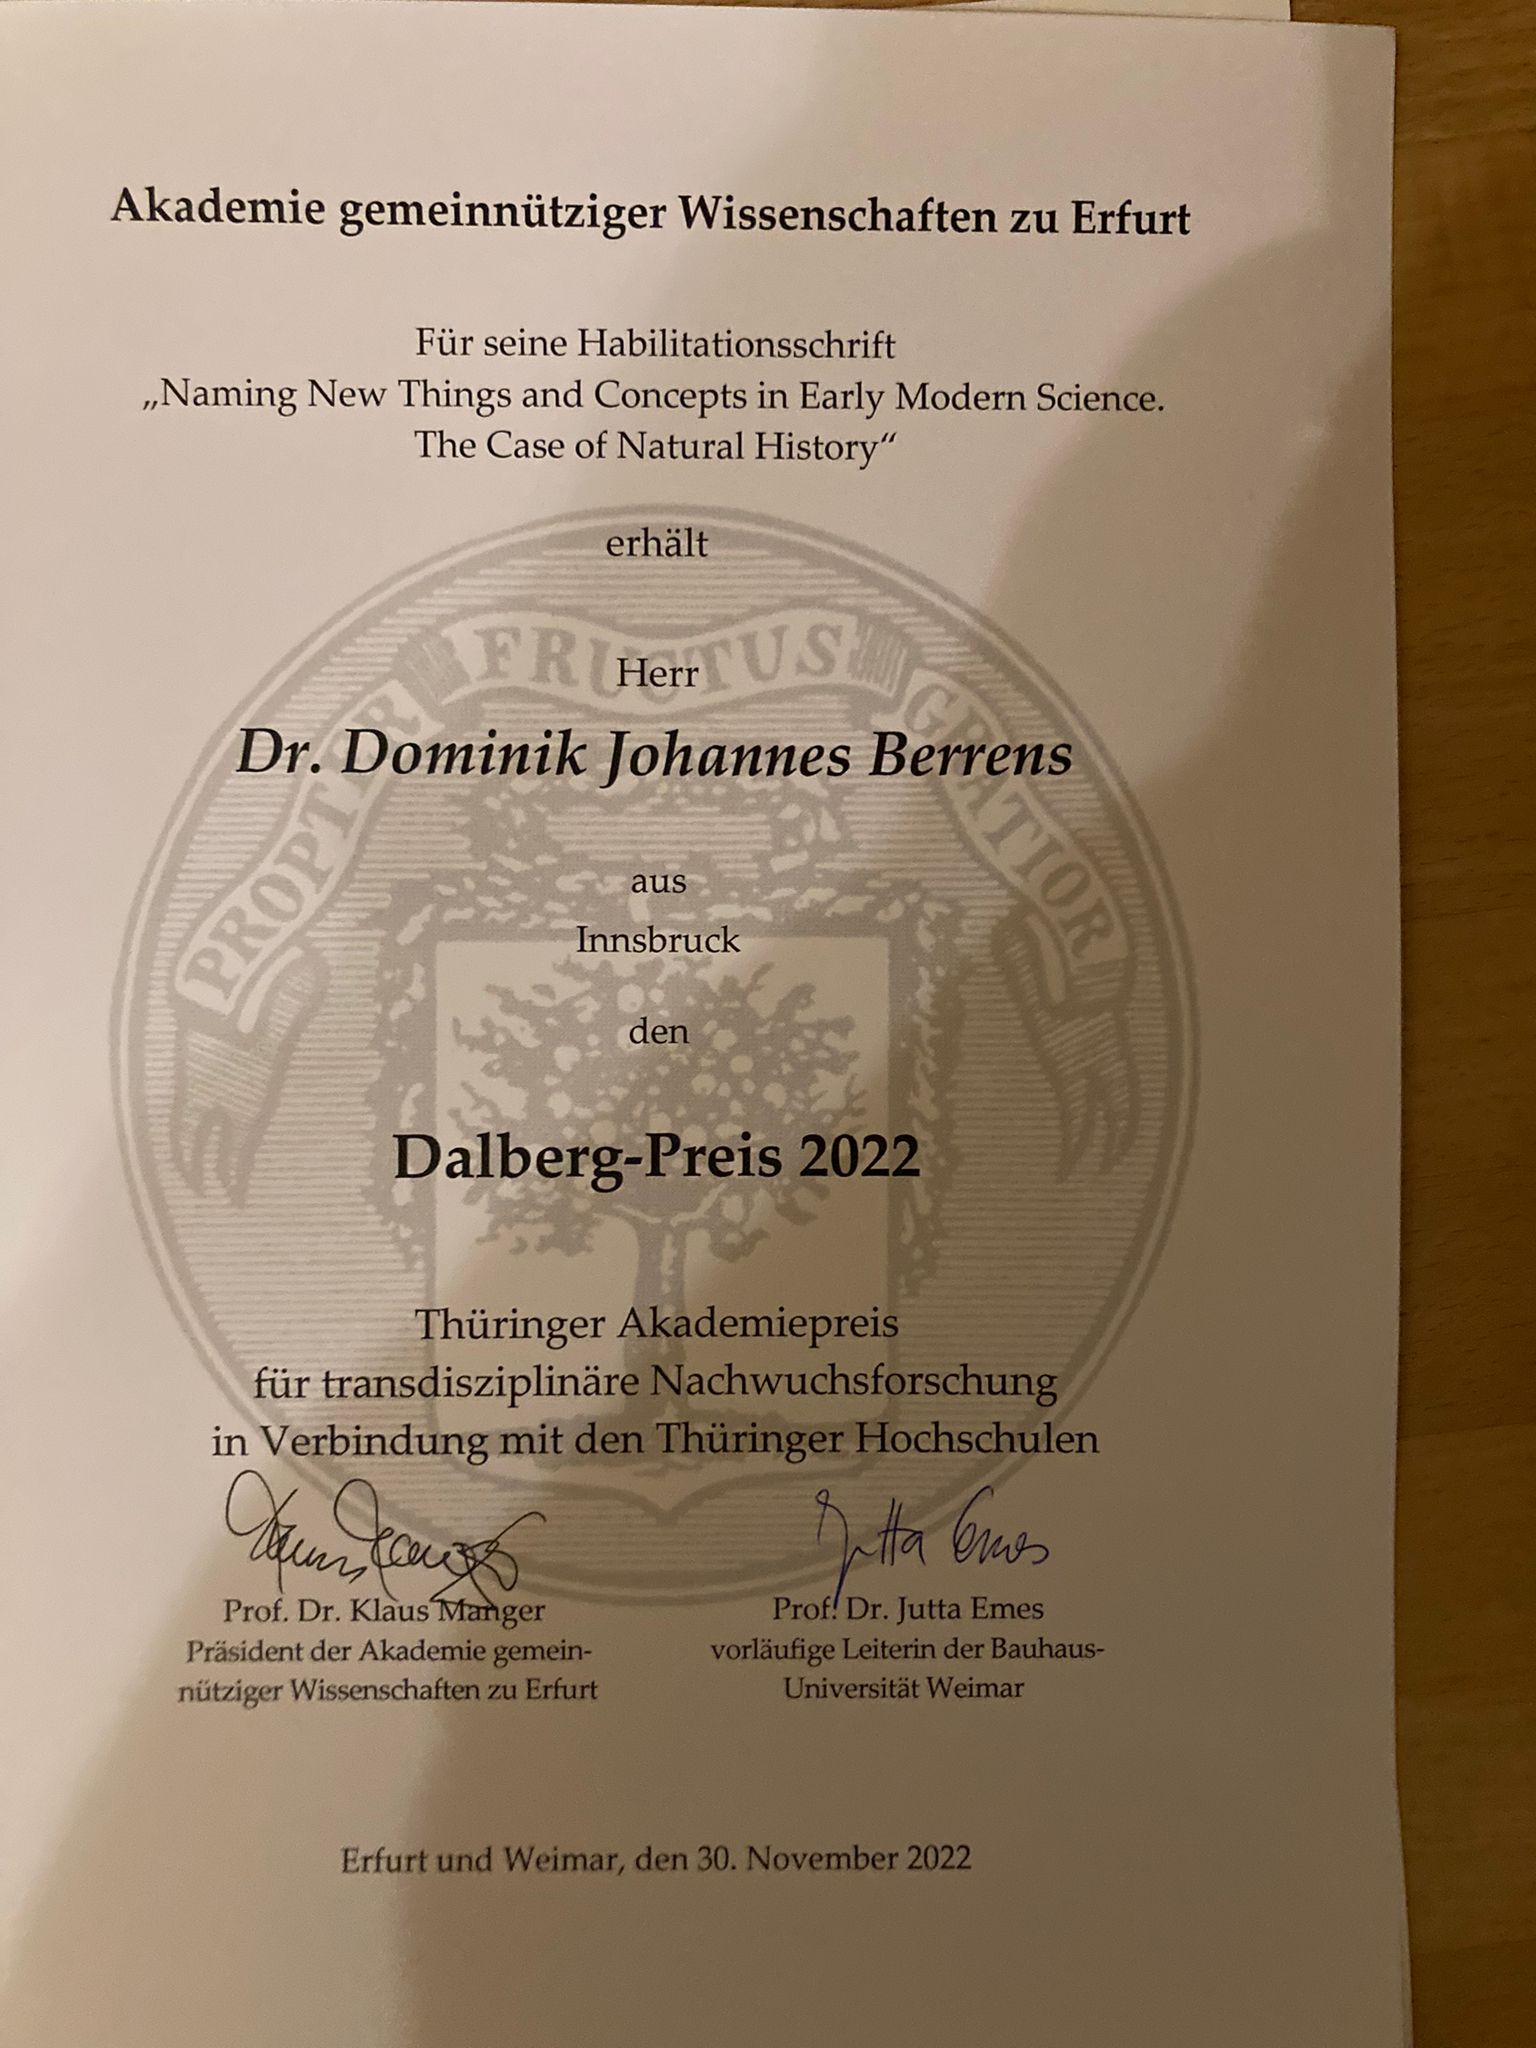 Dalberg-Preis 2022 for Dominik Berrens